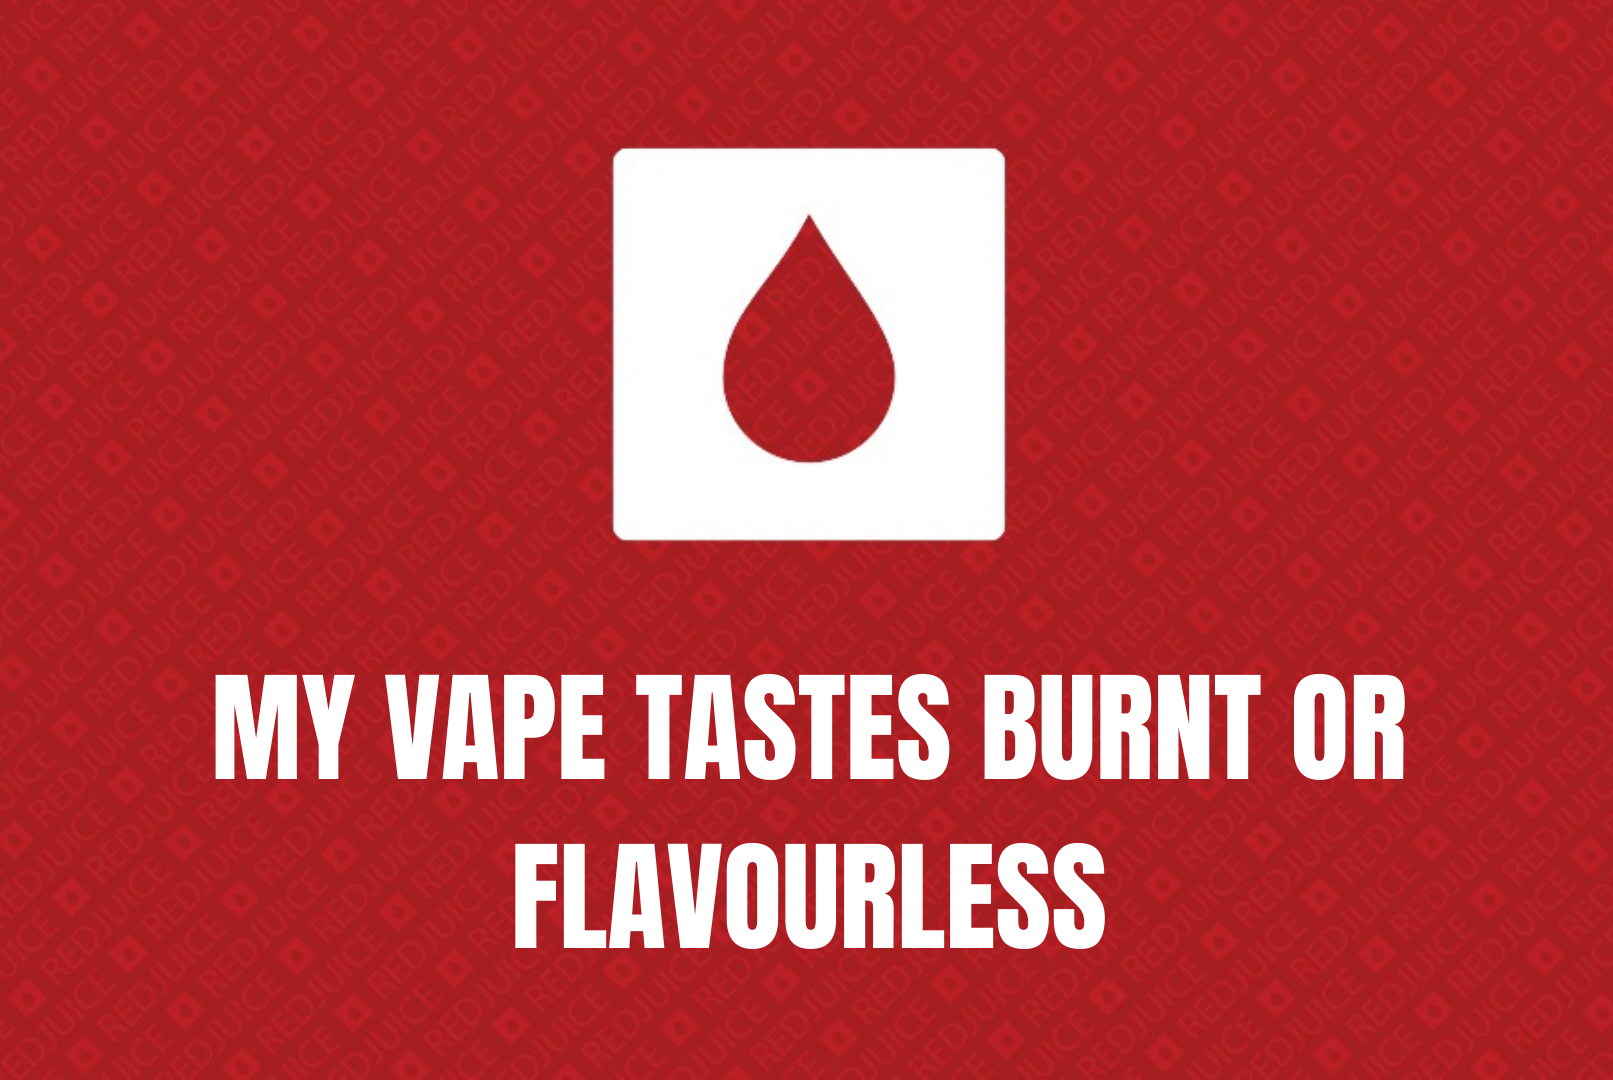 Why Does my vape taste burnt/flavourless?